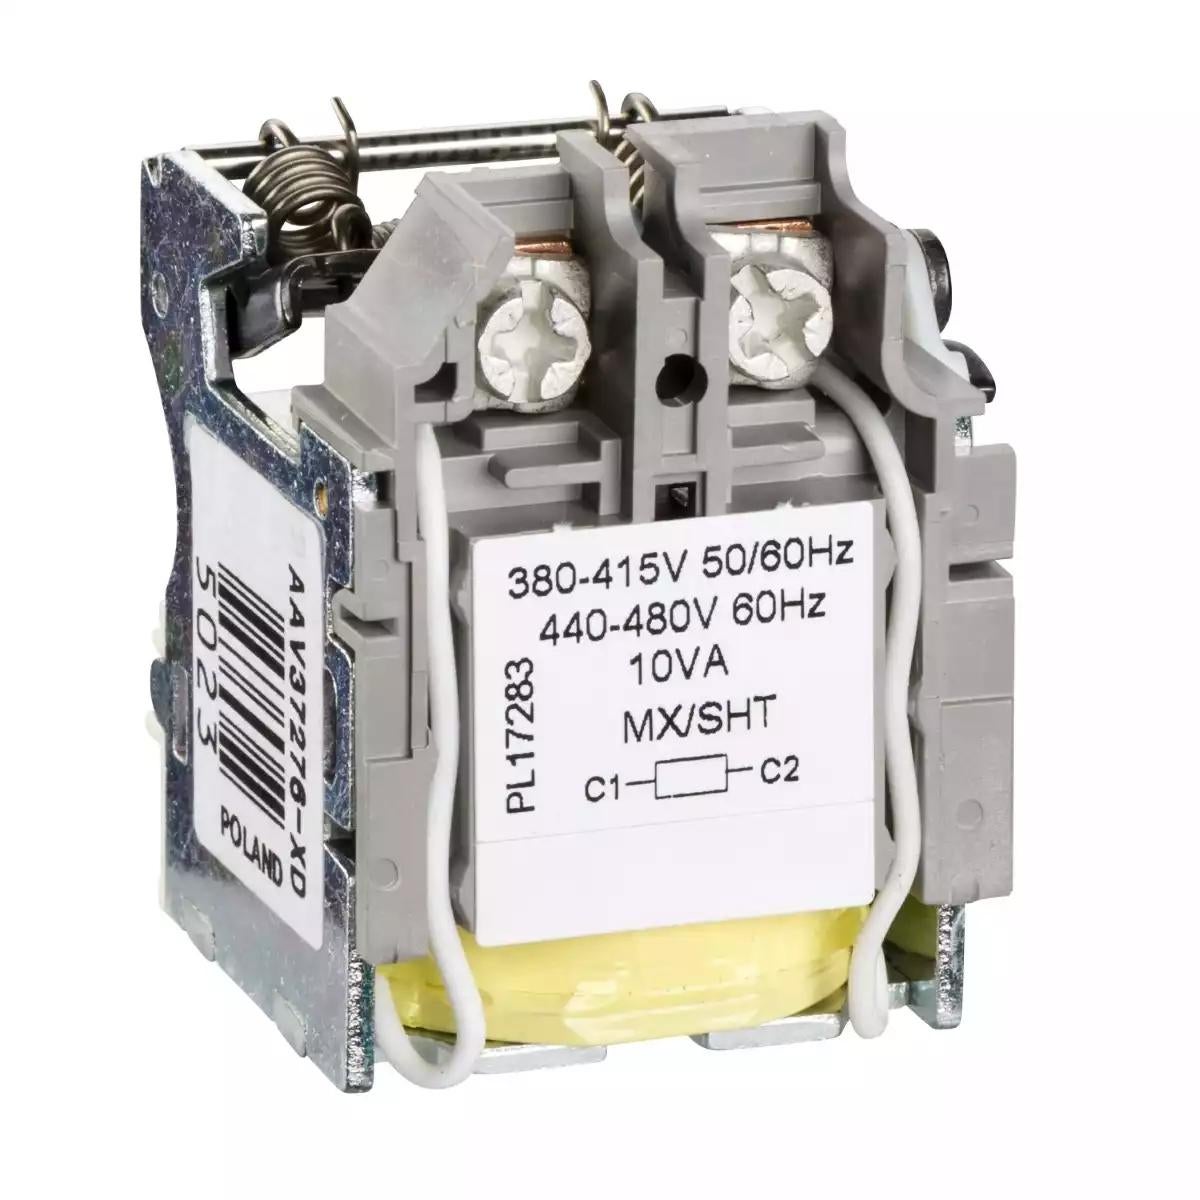 Schneider Electric Compact NSX <630 shunt trip voltage release MX - 440..480V 60Hz, 380..415V 50/60Hz